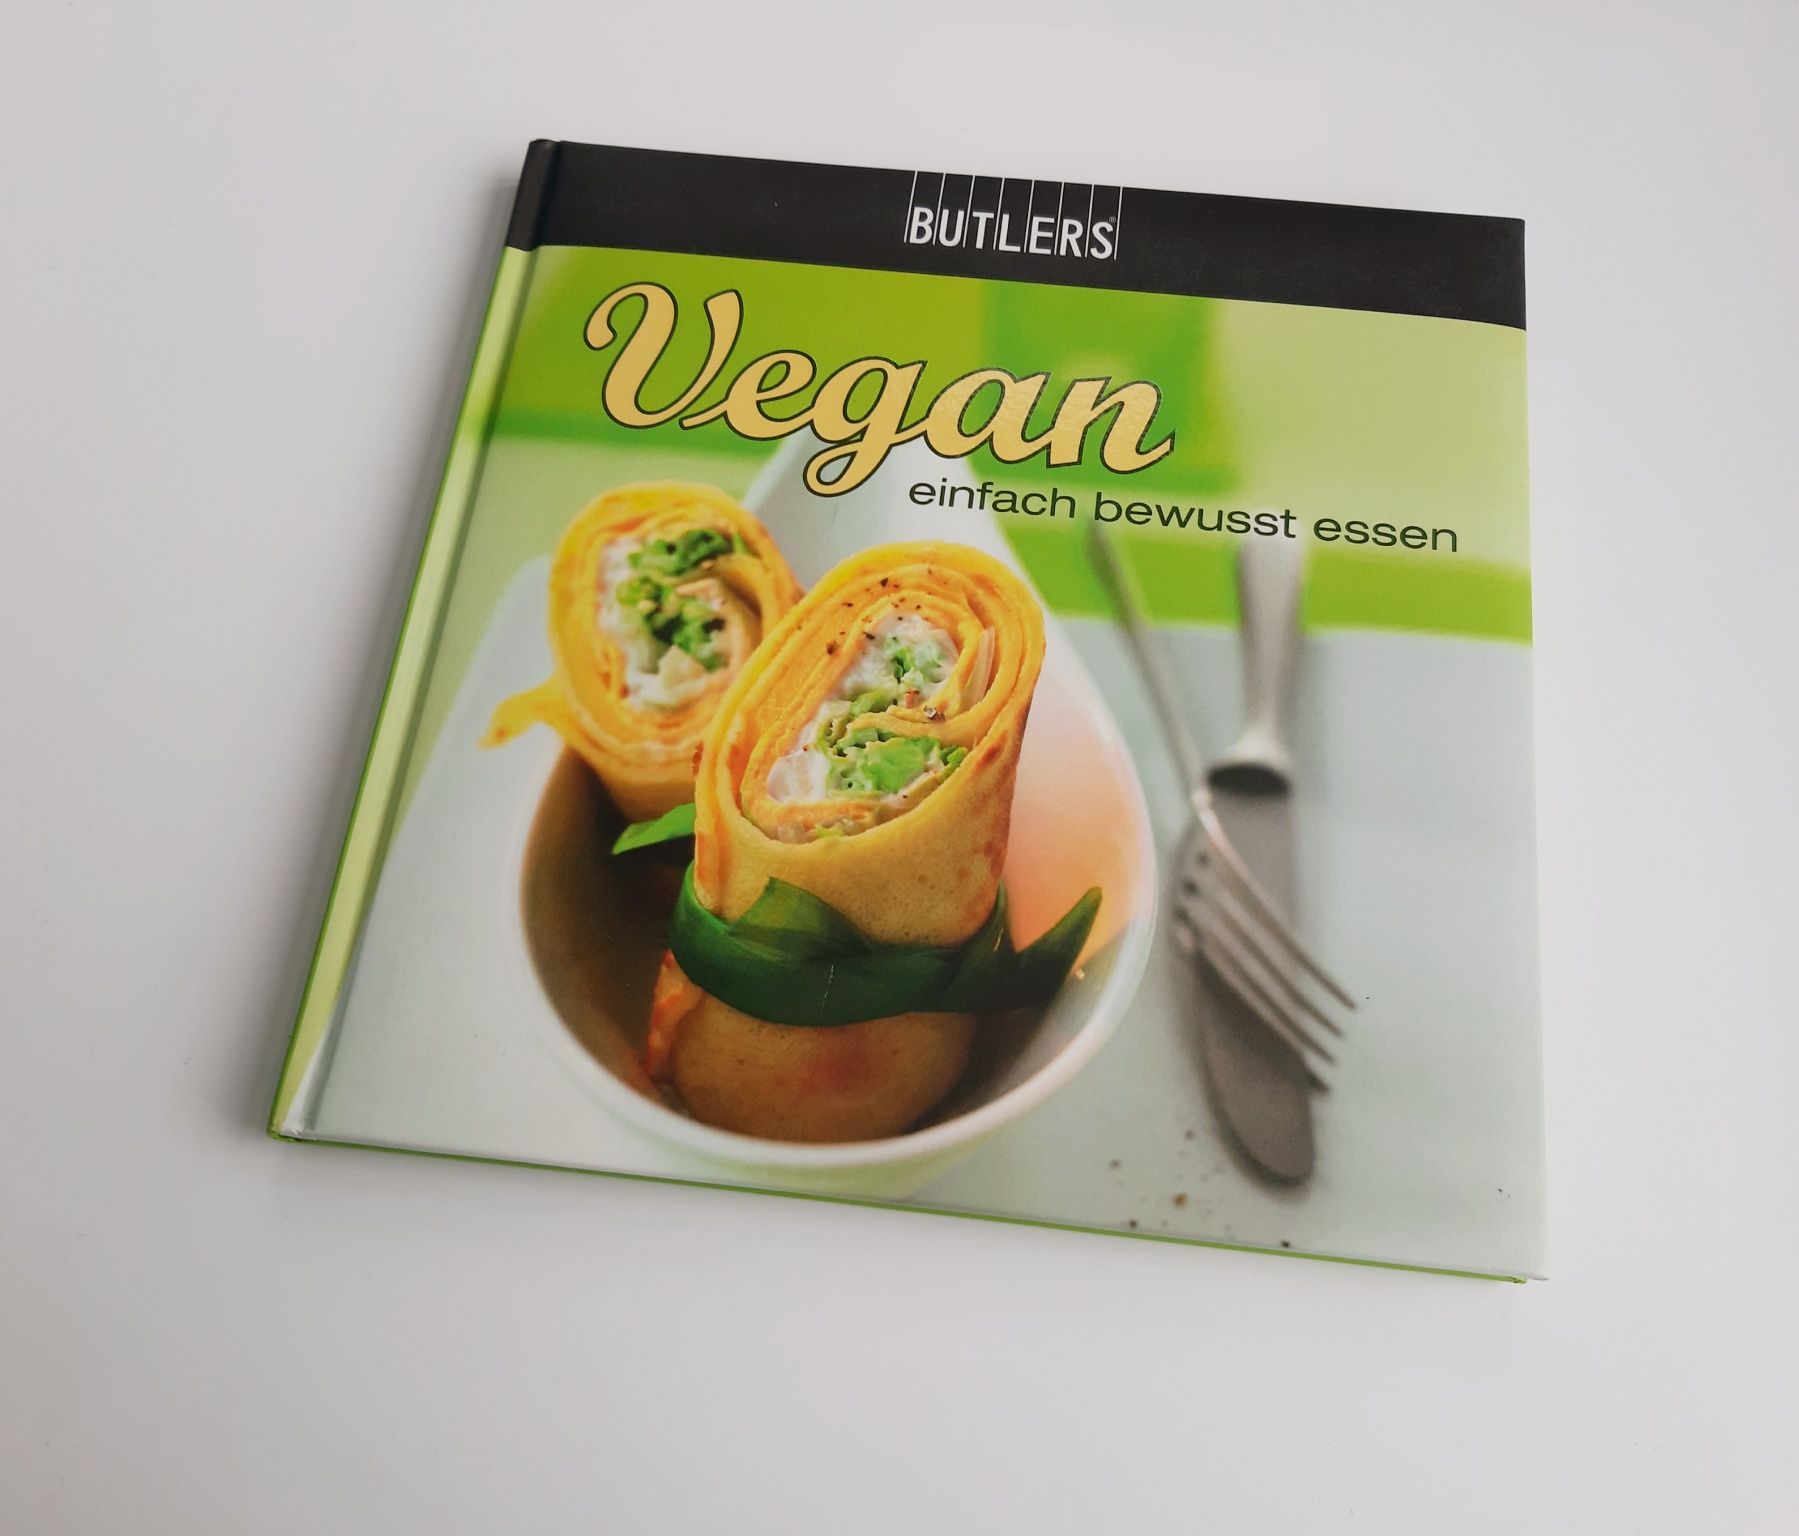 Vegan einfach bewusst essen Butlers kuchnia wegańska po niemiecku